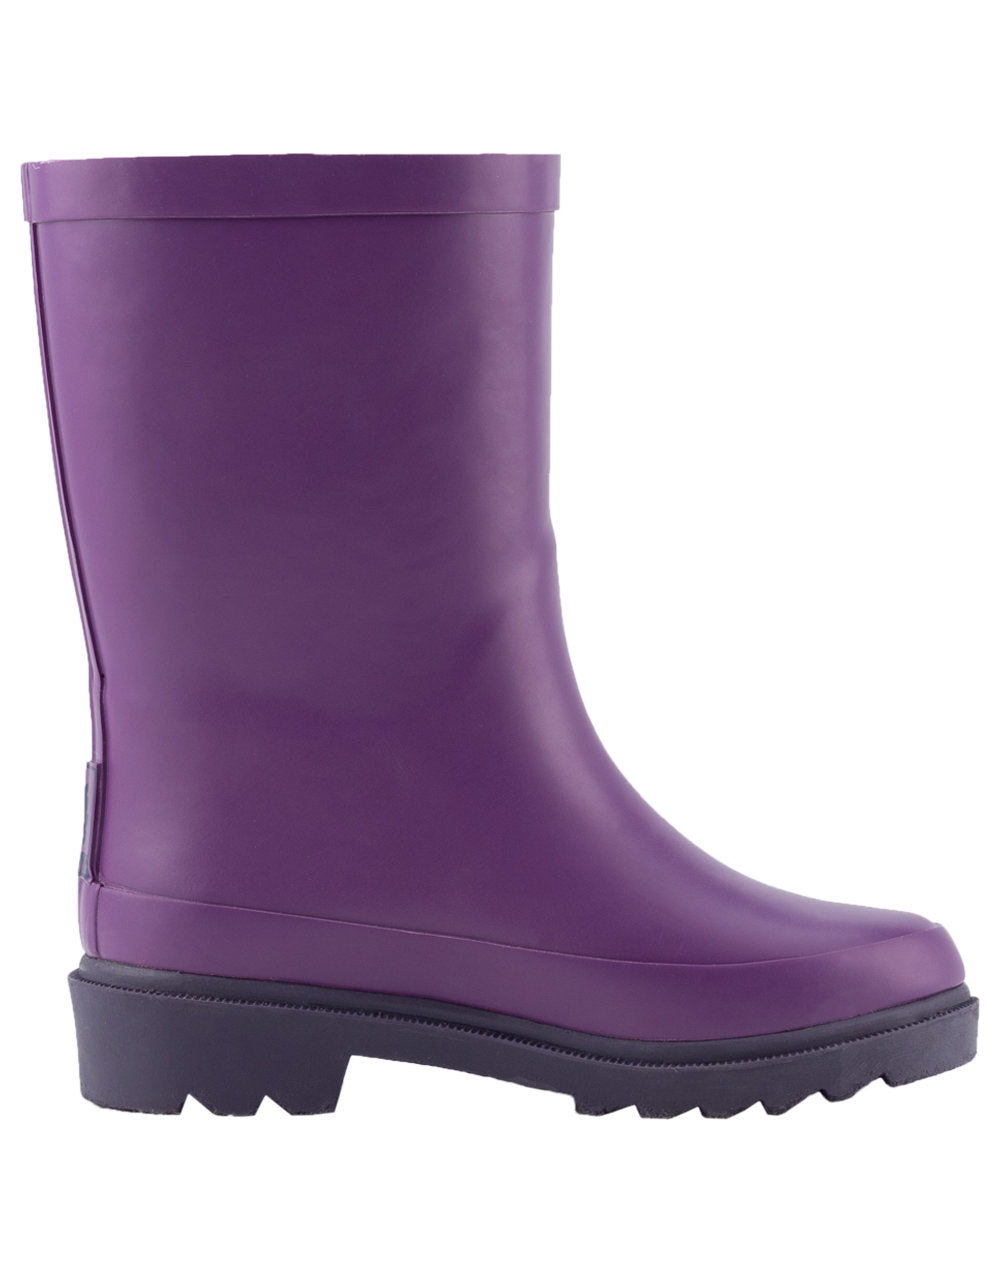 purple rubber boots